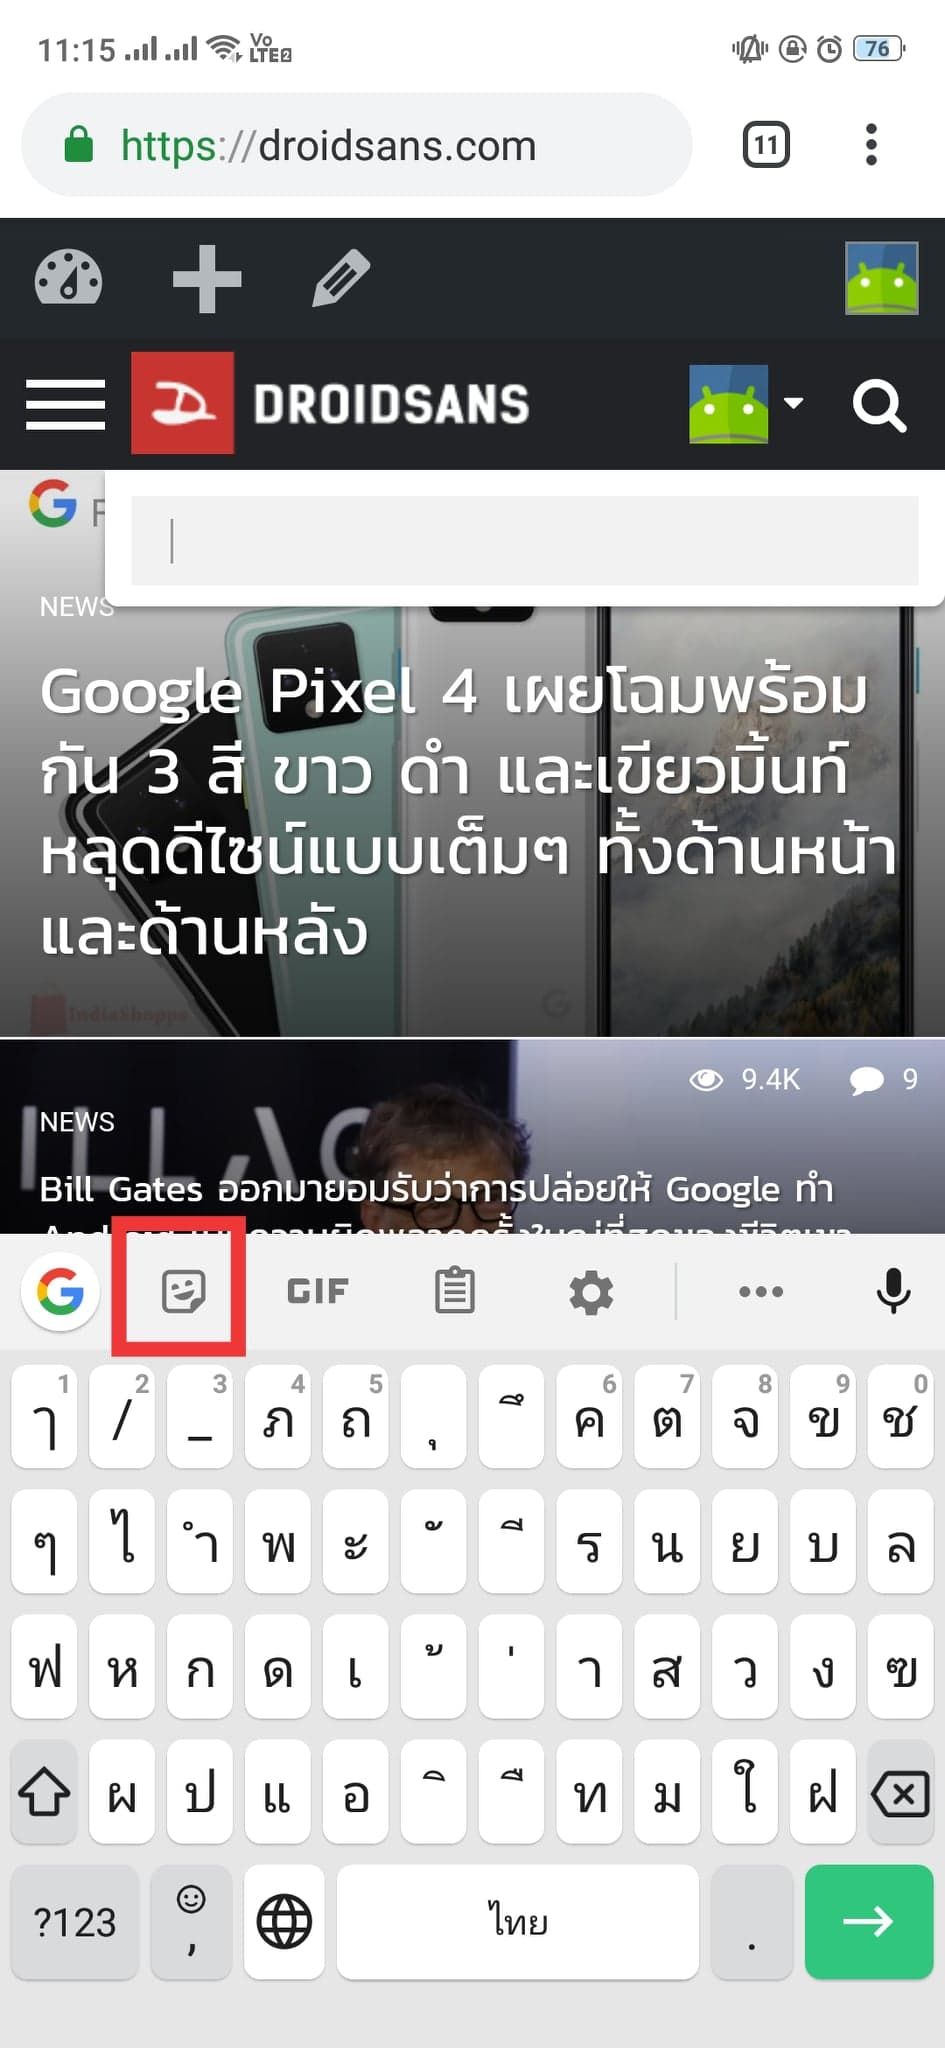 Google ปล่อยฟีเจอร์ใหม่ให้คีย์บอร์ด Gboard สร้างสติ๊กเกอร์หน้าตัวเองได้ฟรีๆ ทั้ง Android และ iOS